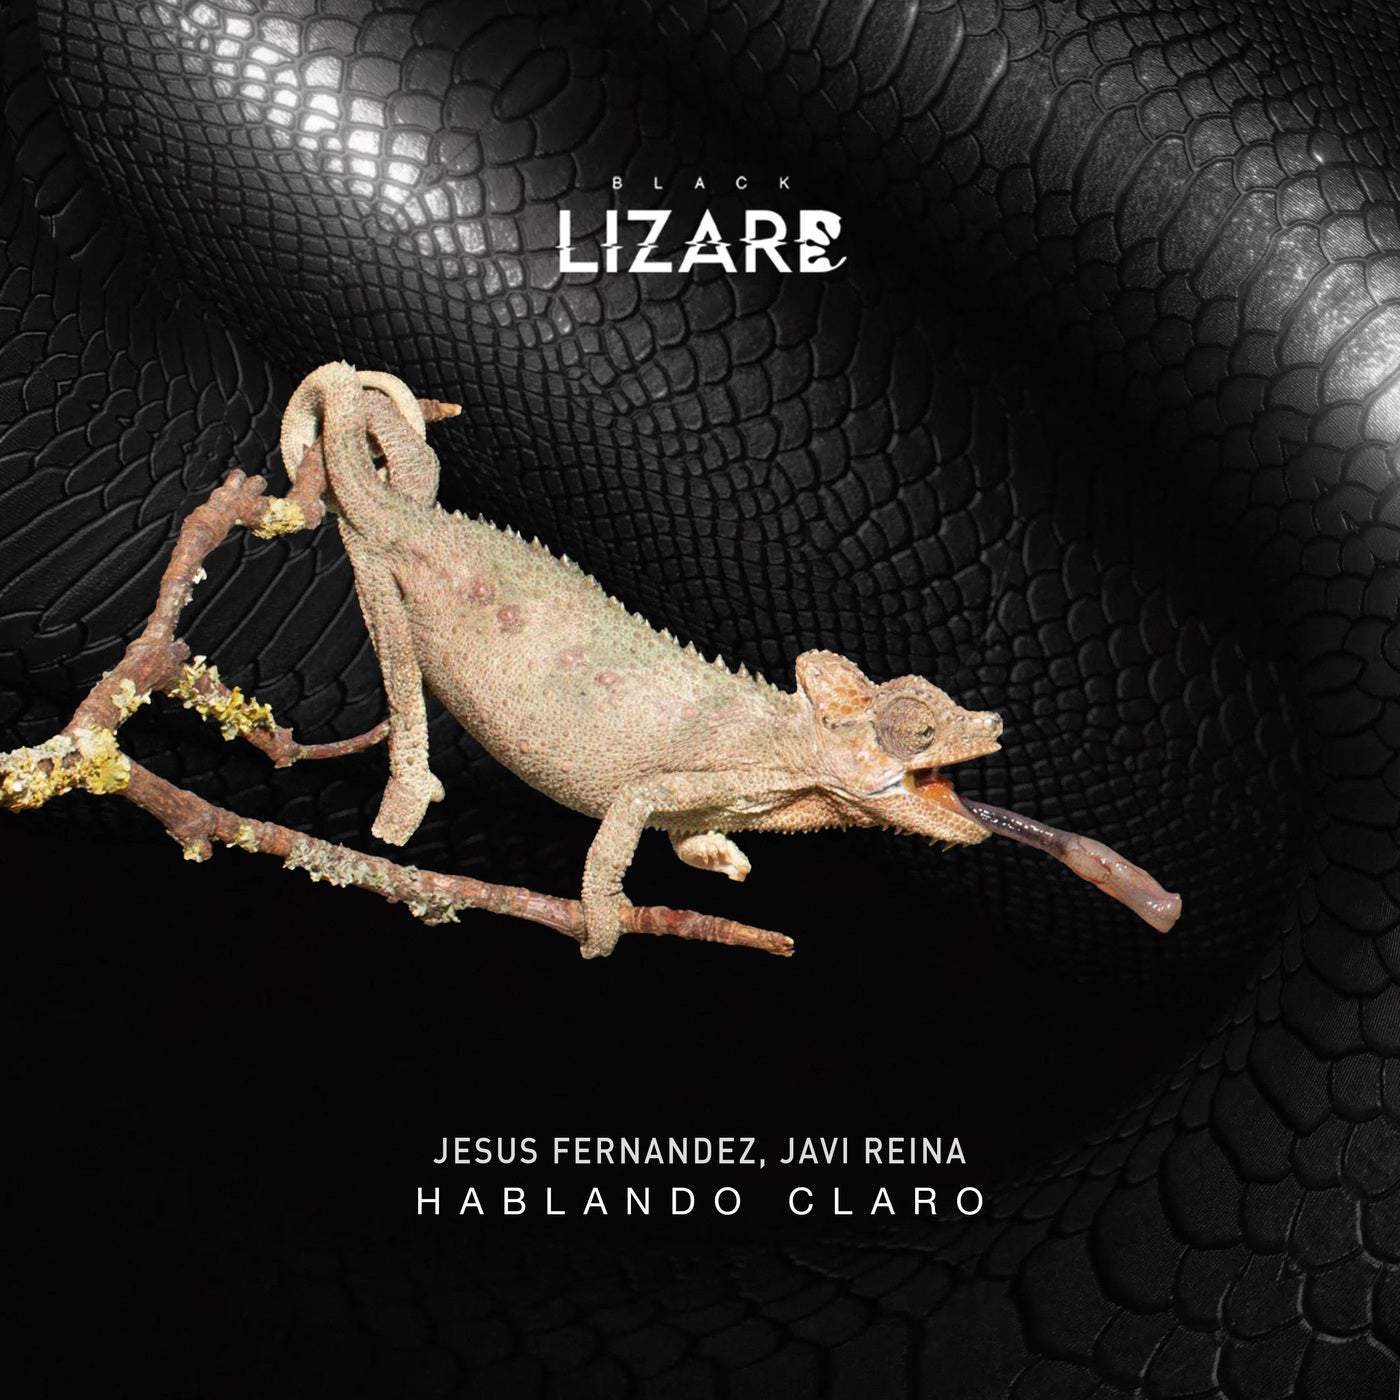 image cover: Javi Reina, Jesus Fernandez - Hablando Claro on Black Lizard Records